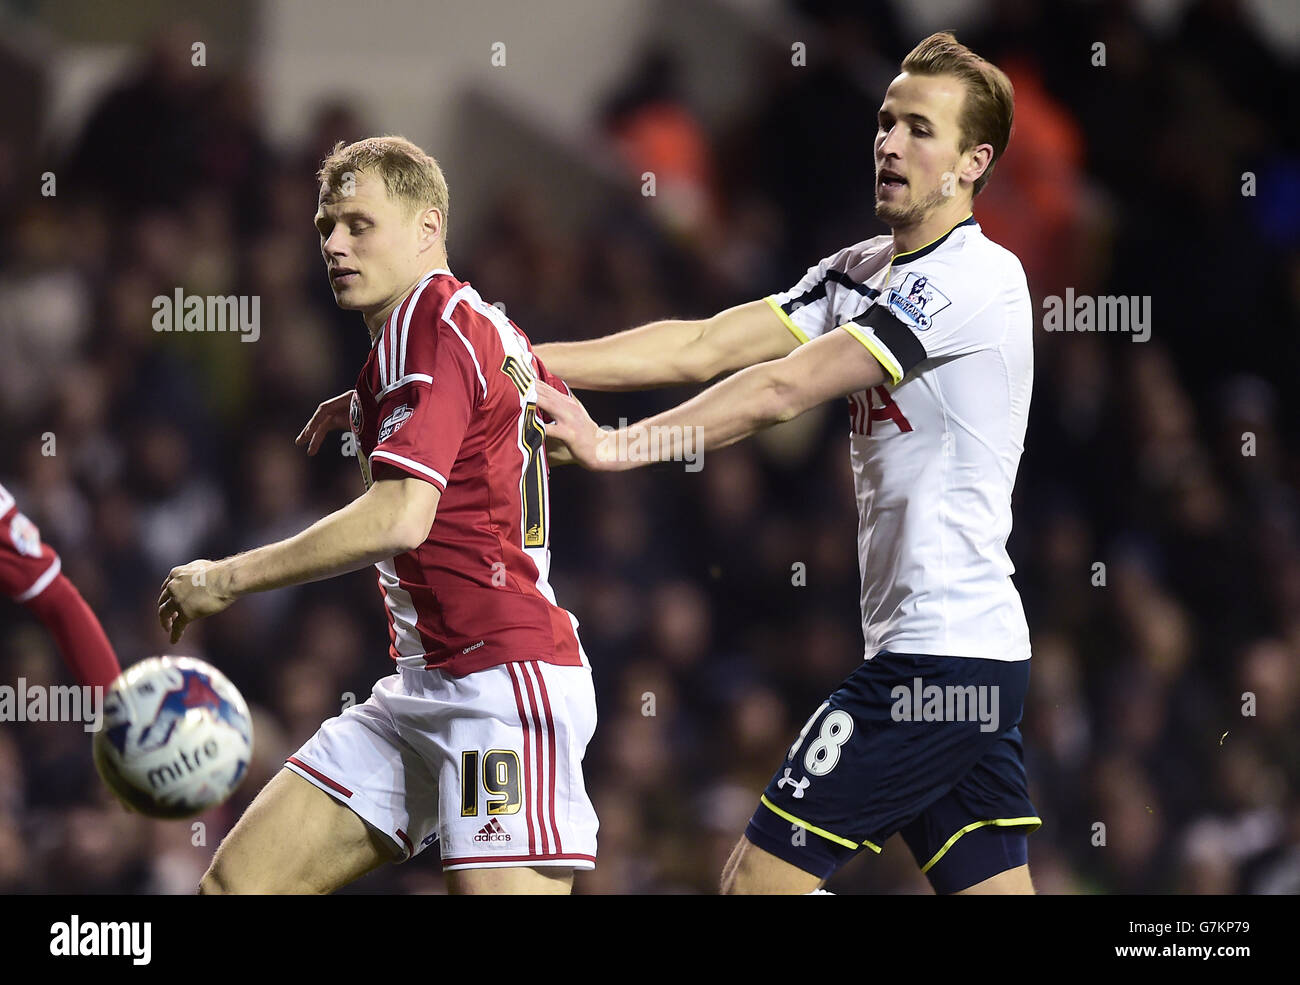 Tottenham Hotspur's Harry Kane (right) and Sheffield United's Jay McEveley (left) battle for the ball Stock Photo